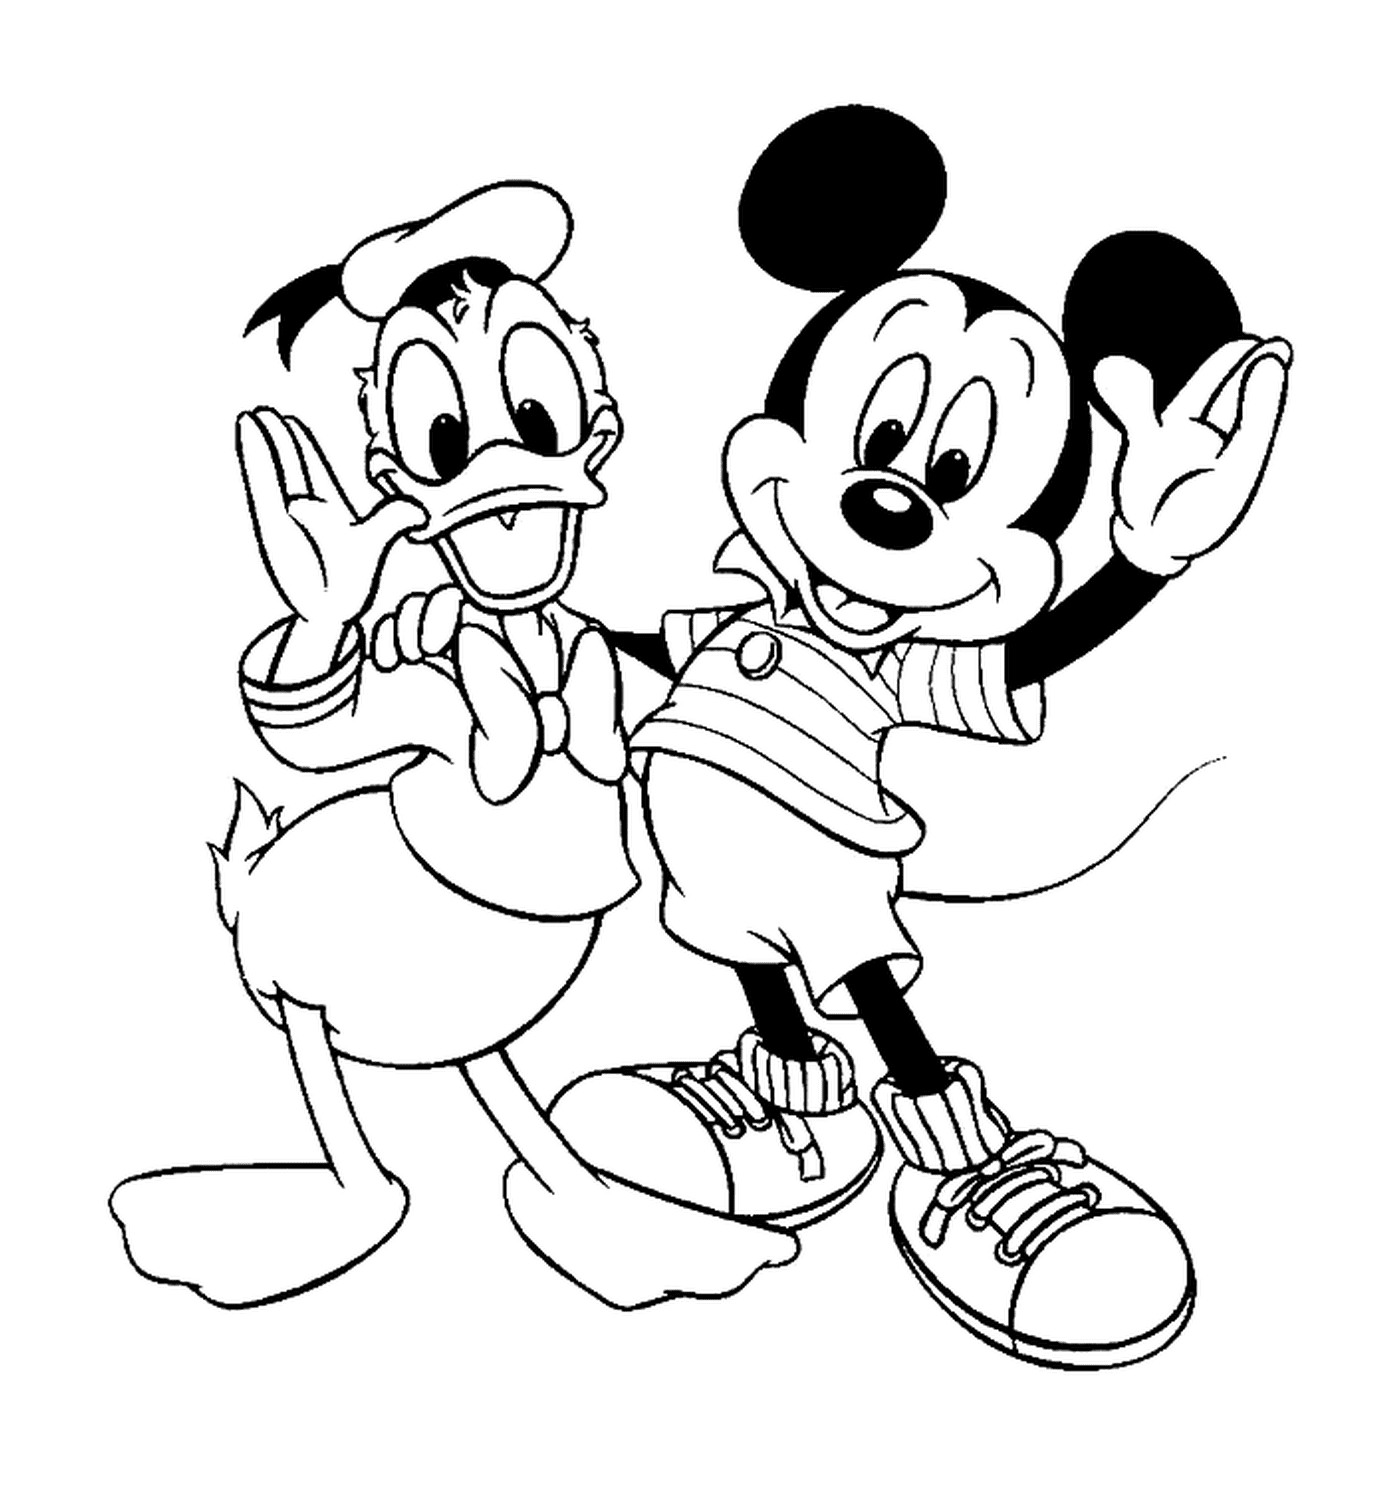   Dessin de Mickey et de son ami Donald : Mickey Mouse et Donald Duck 